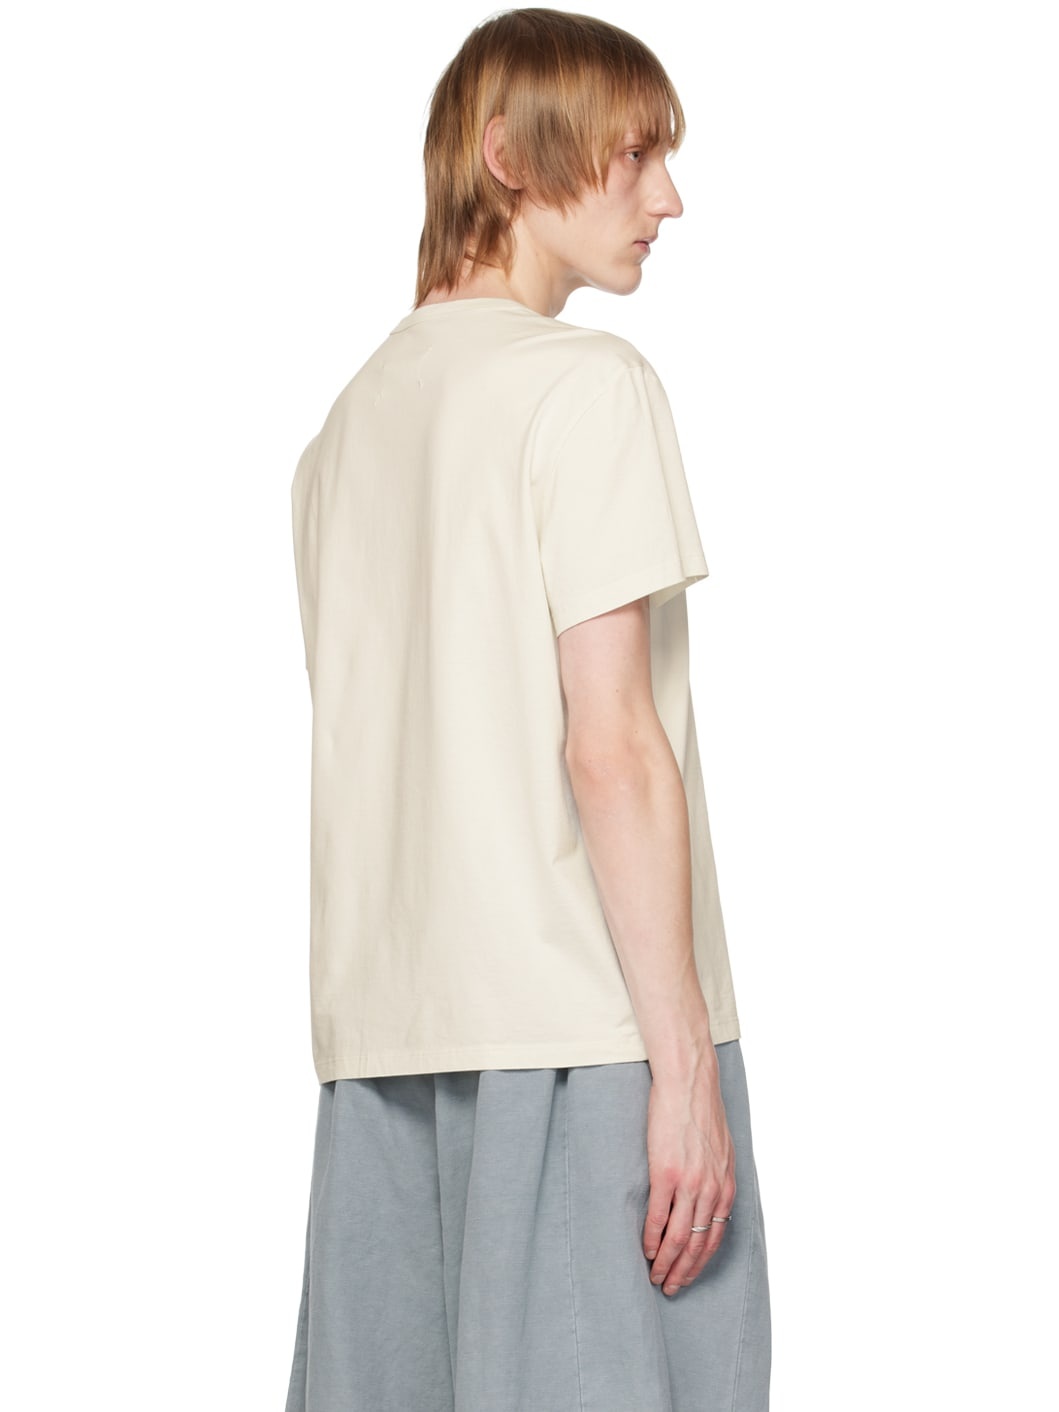 Off-White Numeric T-Shirt - 3